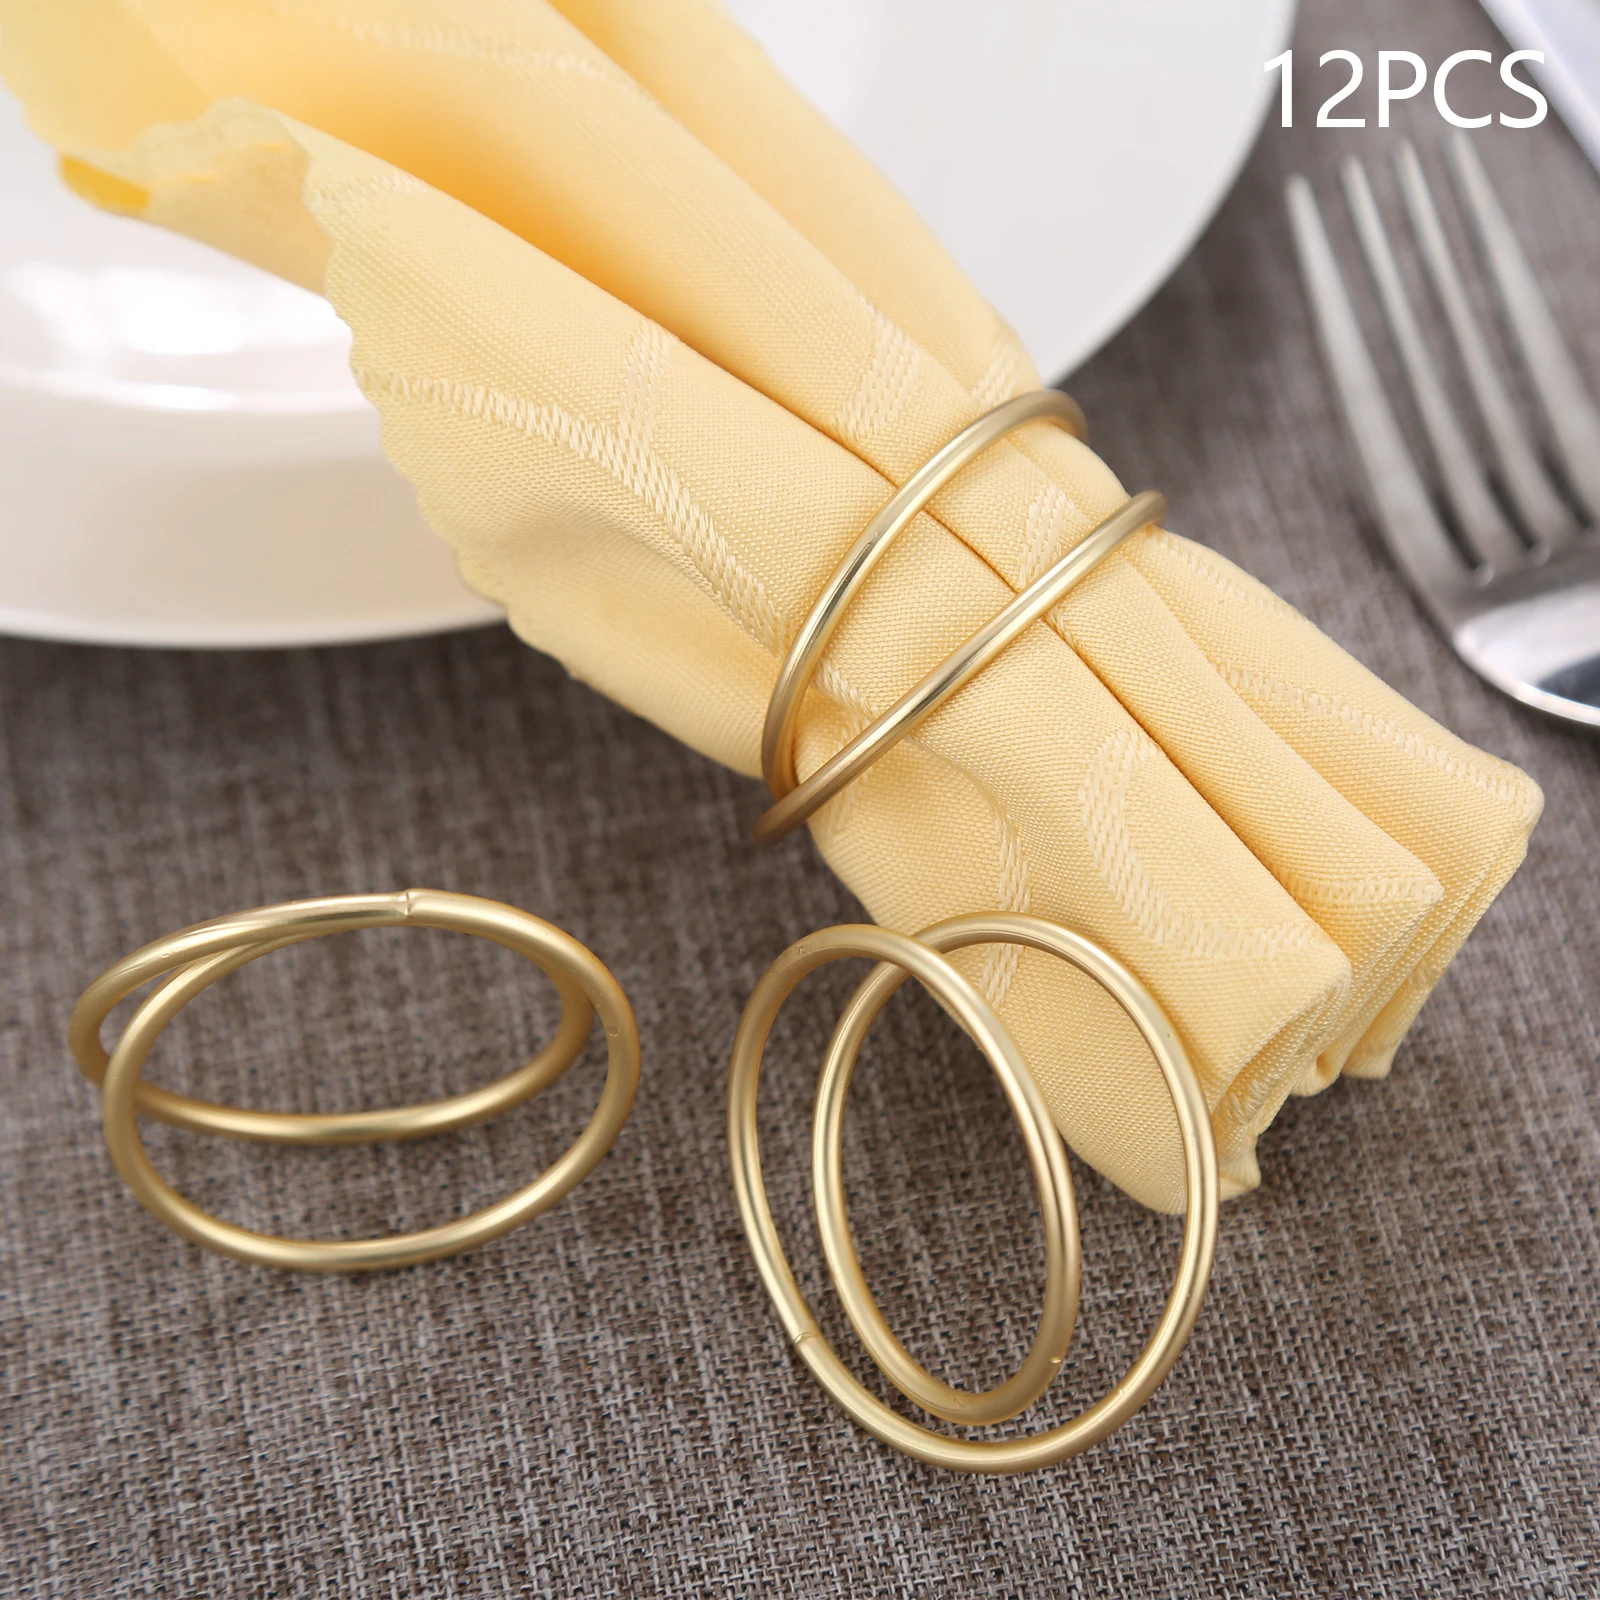 12pcs Cross 2-Circles Napkin Rings Matte Golden Table Tissue Metal Holder Dump Gold Minimalist Decor Party Wedding Home/Hotel